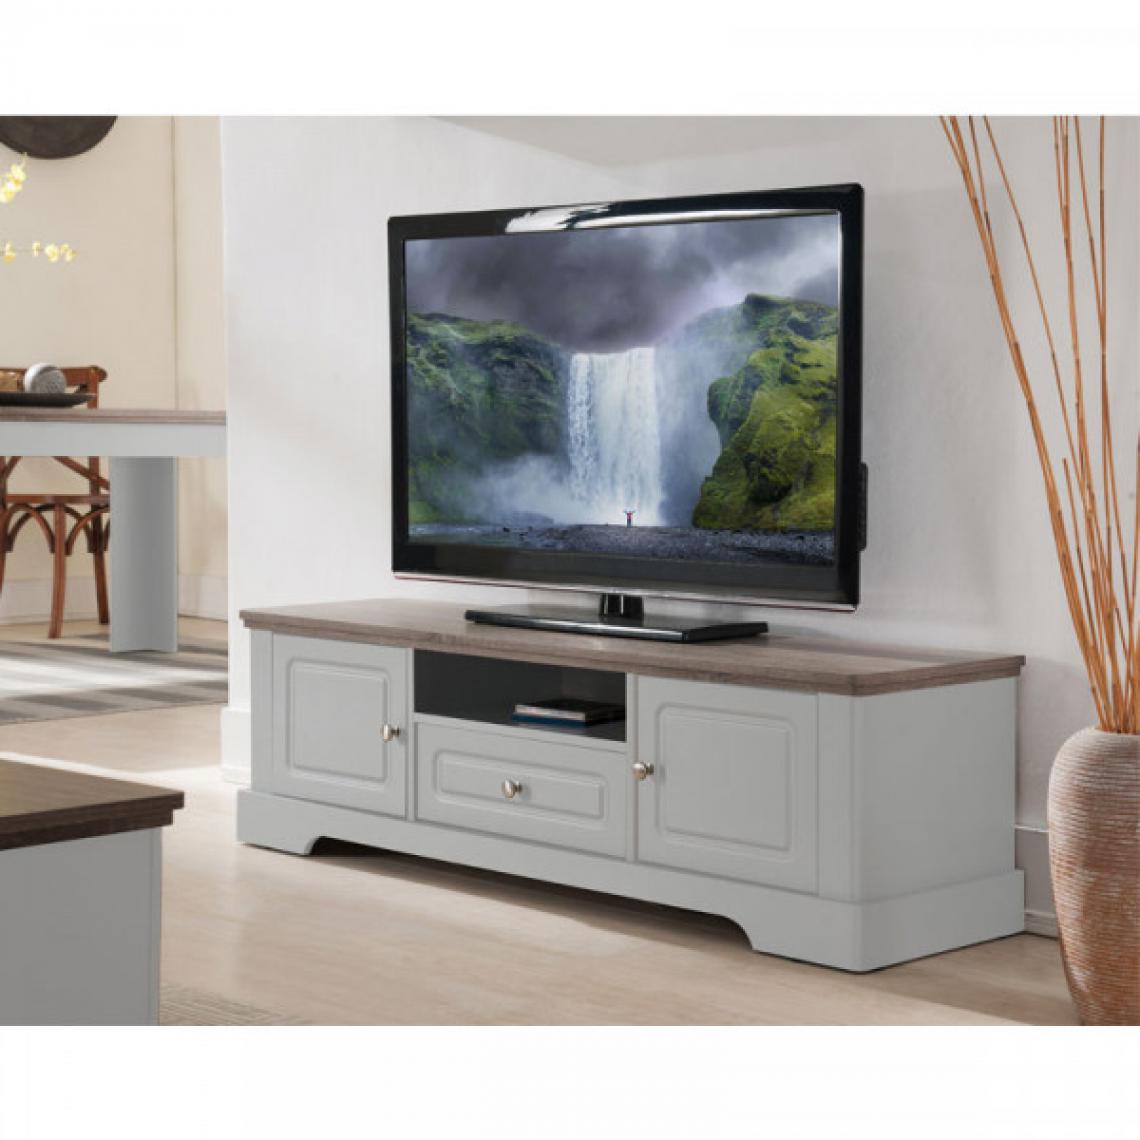 Dansmamaison - Meuble TV 2 portes 1 tiroir Blanc/Chêne - DUNE - L 139 x l 39 x H 41.5 cm - Meubles TV, Hi-Fi